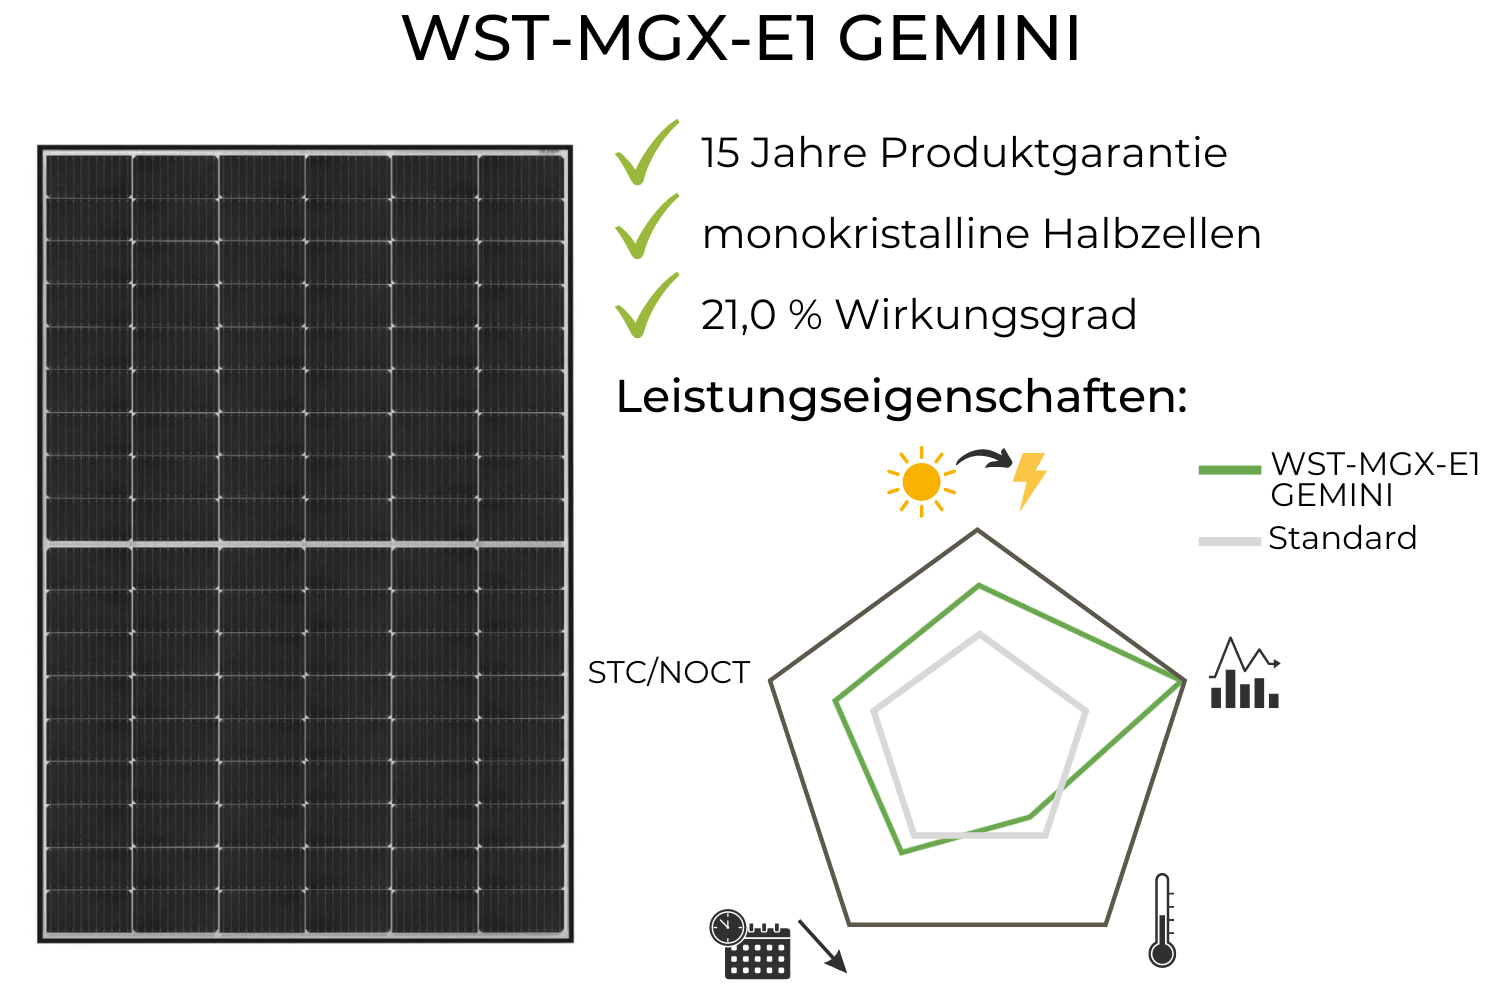 WST-MGX-E1 GEMINI